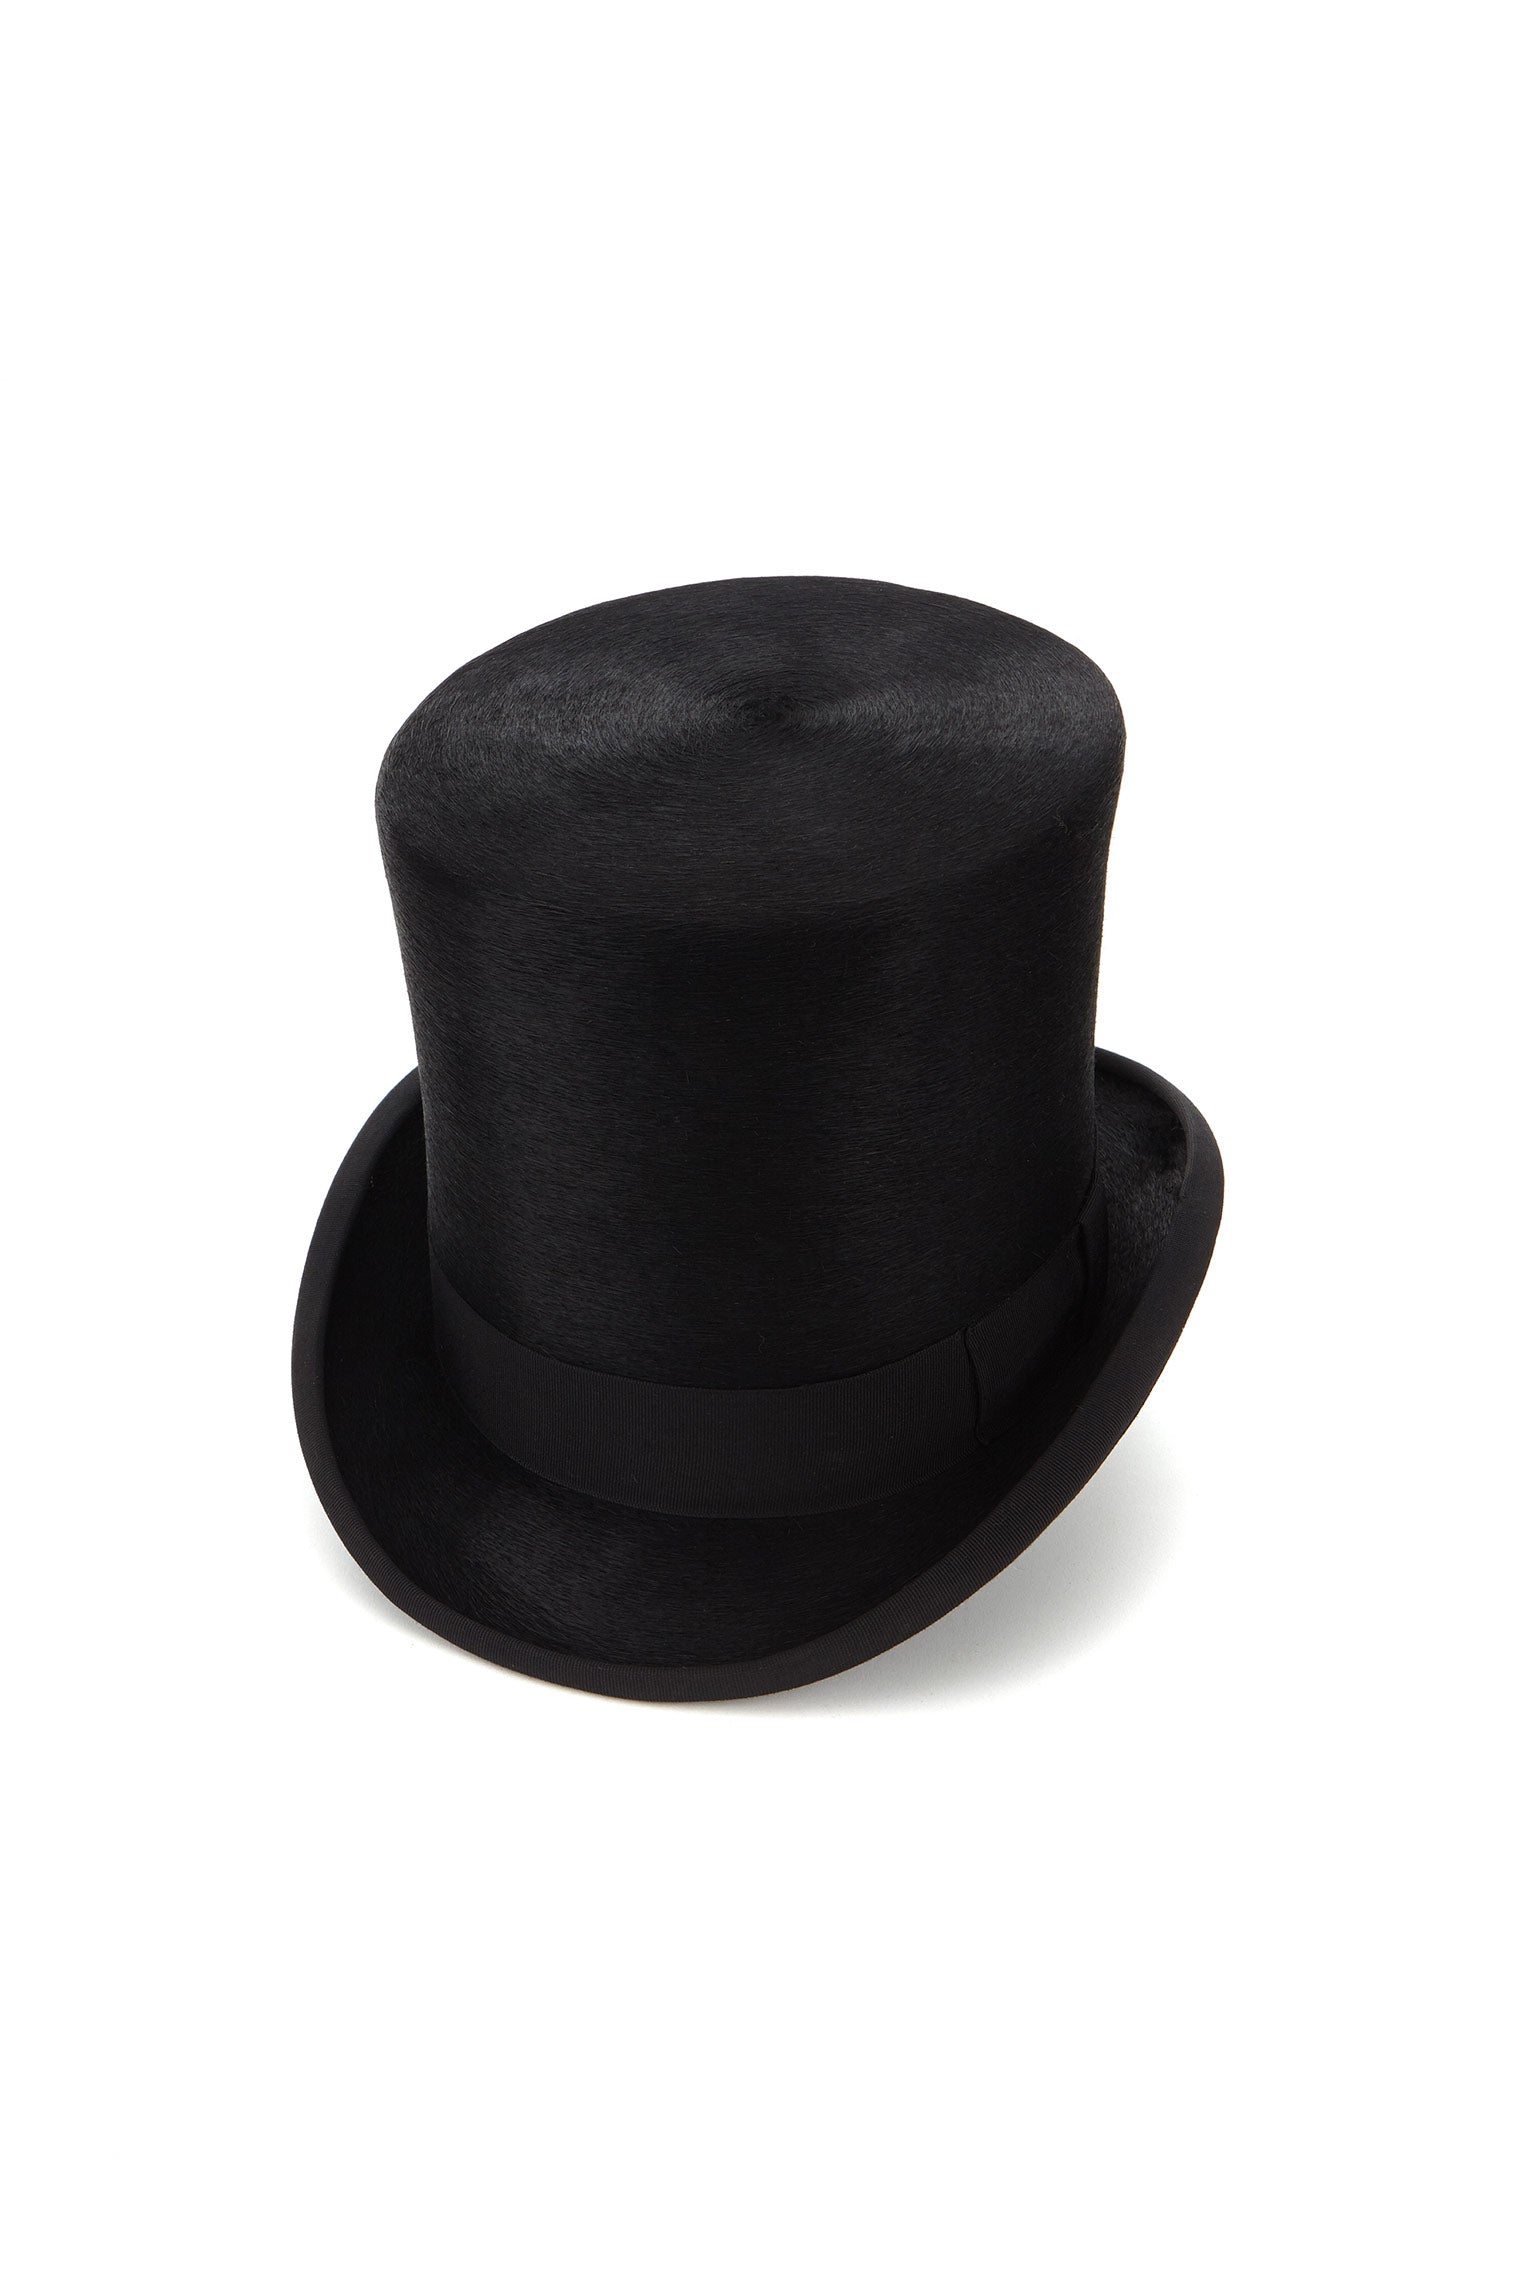 Westminster High Crown Top Hat - Top Hats - Lock & Co. Hatters London UK